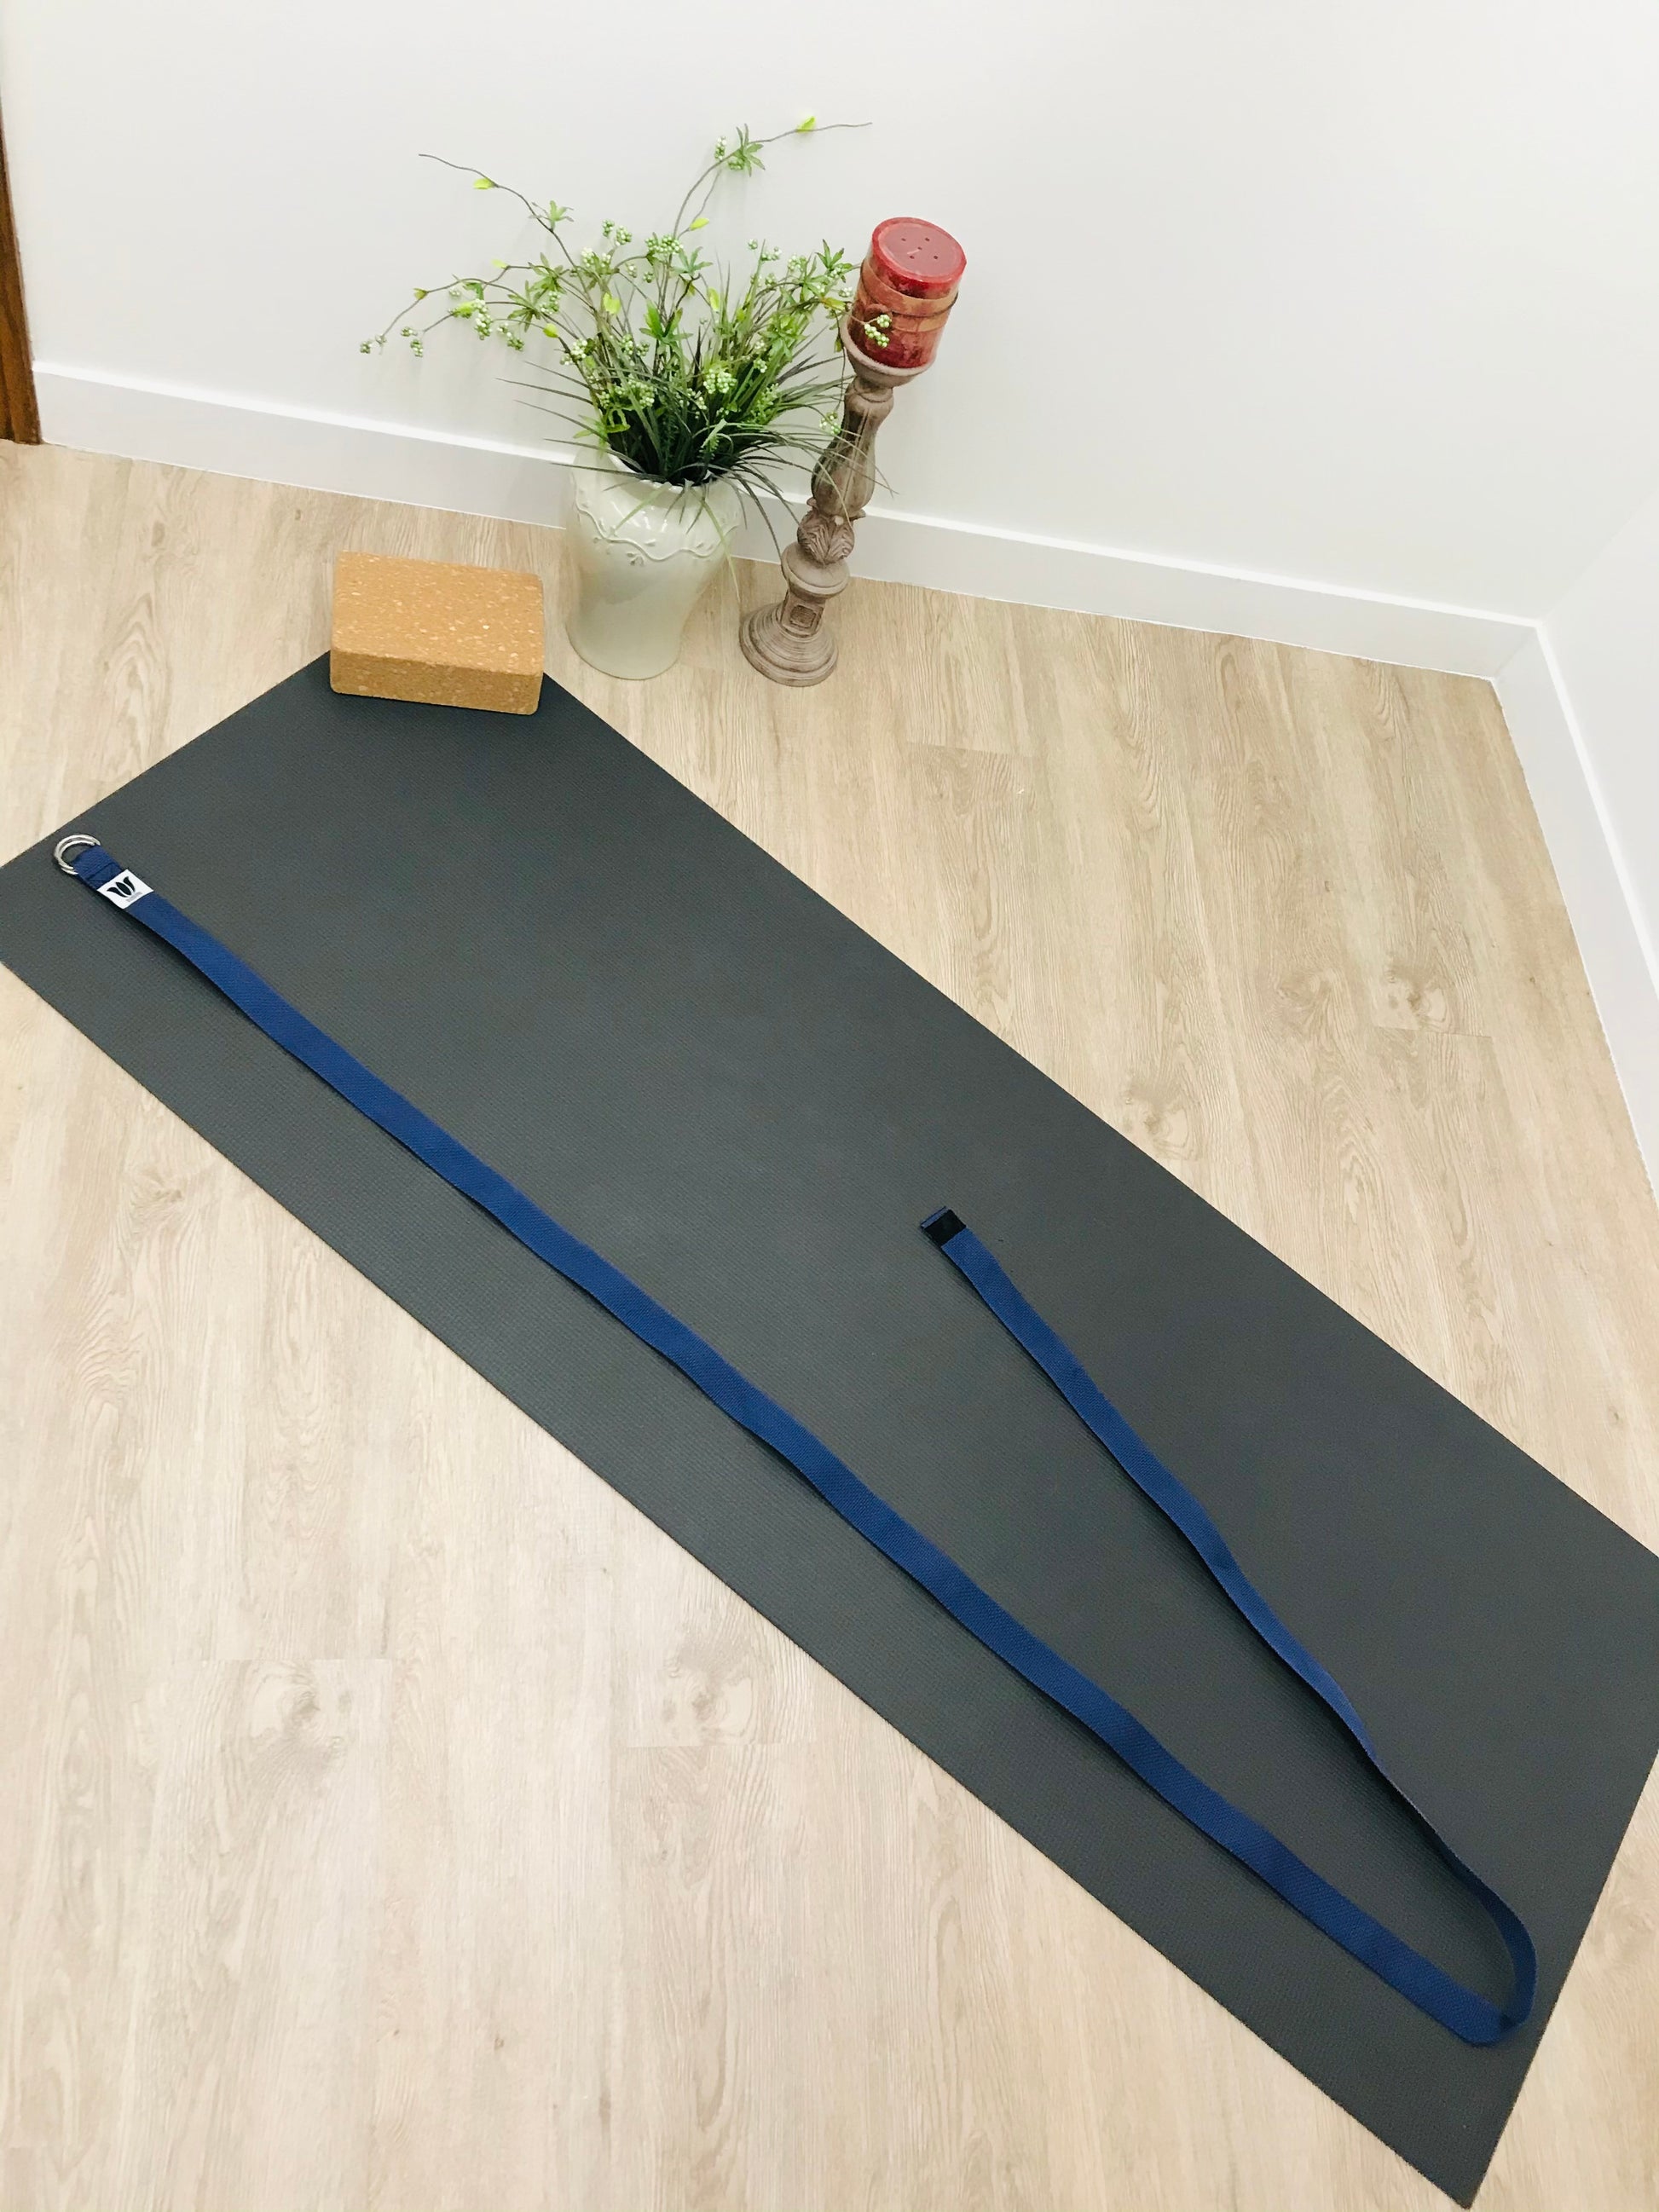 Extra long yoga strap, 9 foot yoga strap, canadian made yoga equipment, my yoga room elements